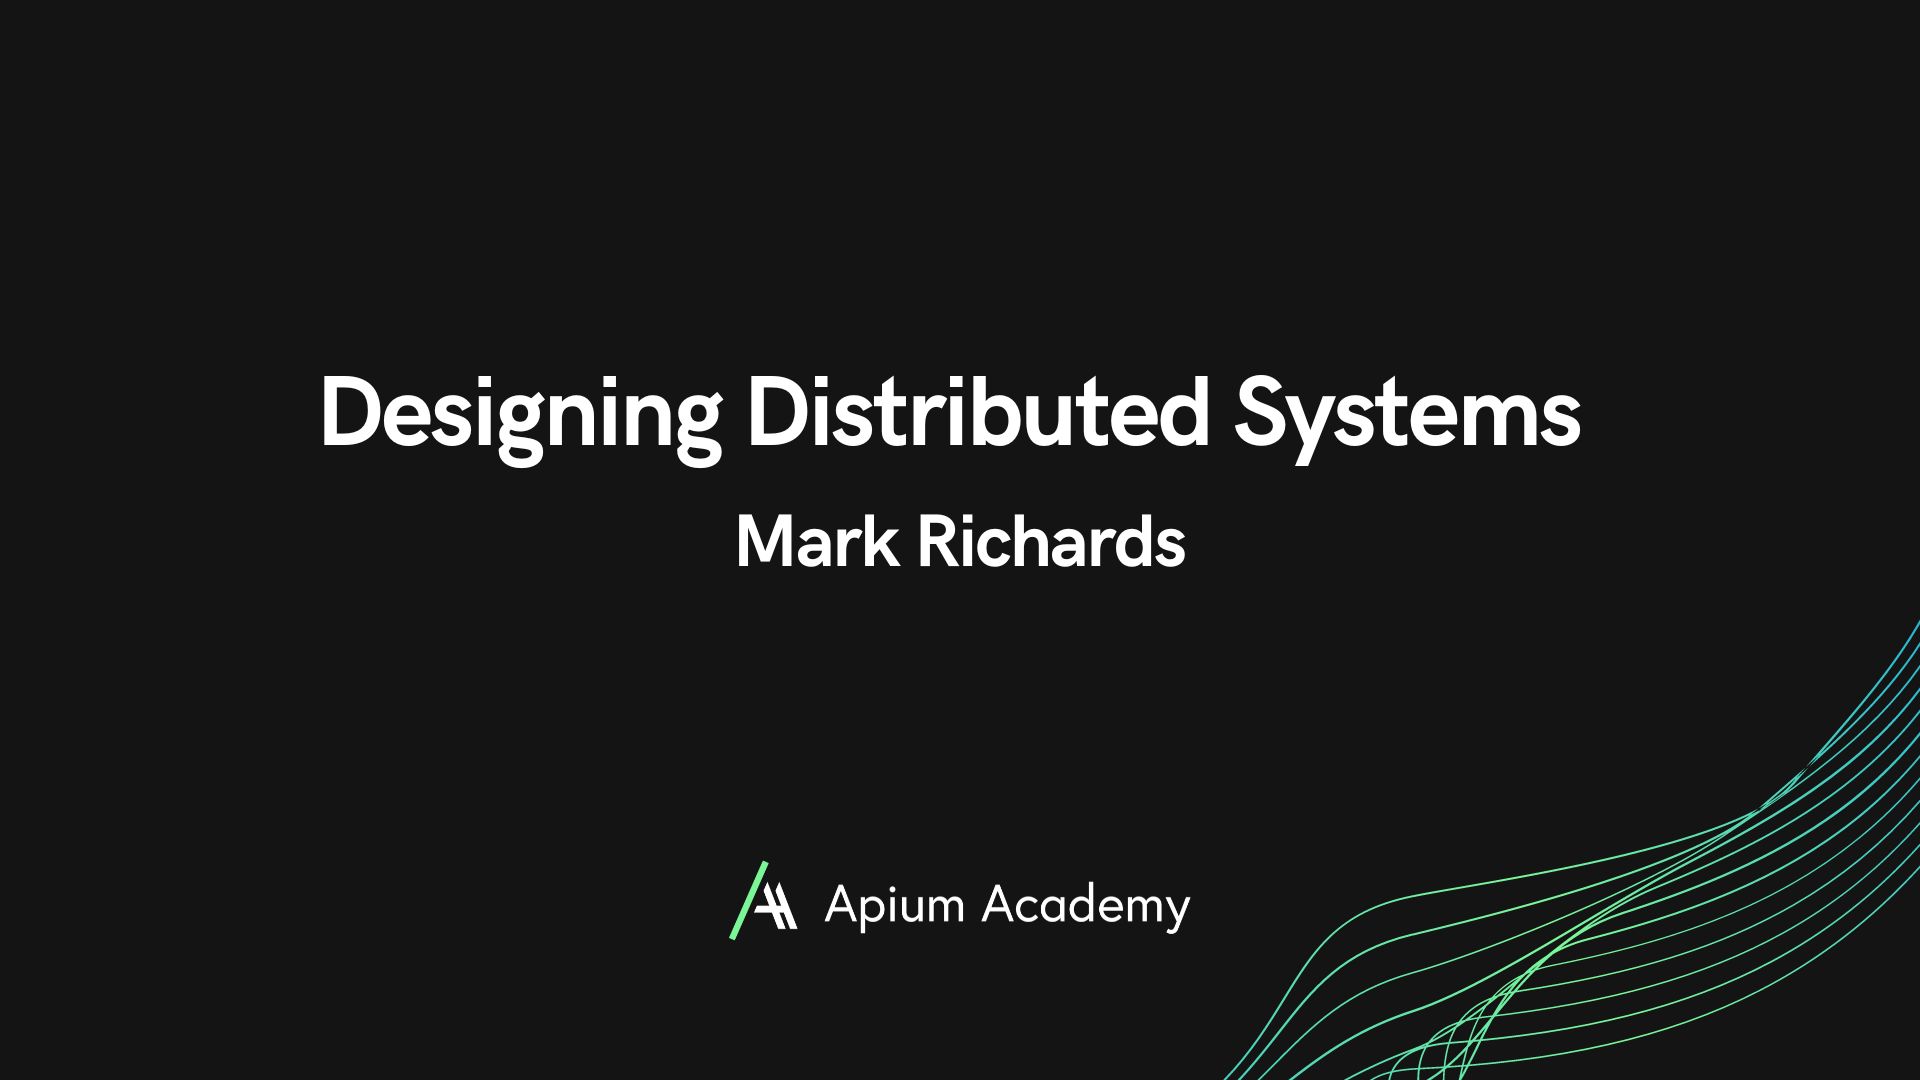 Designing Distributed Systems Workshop